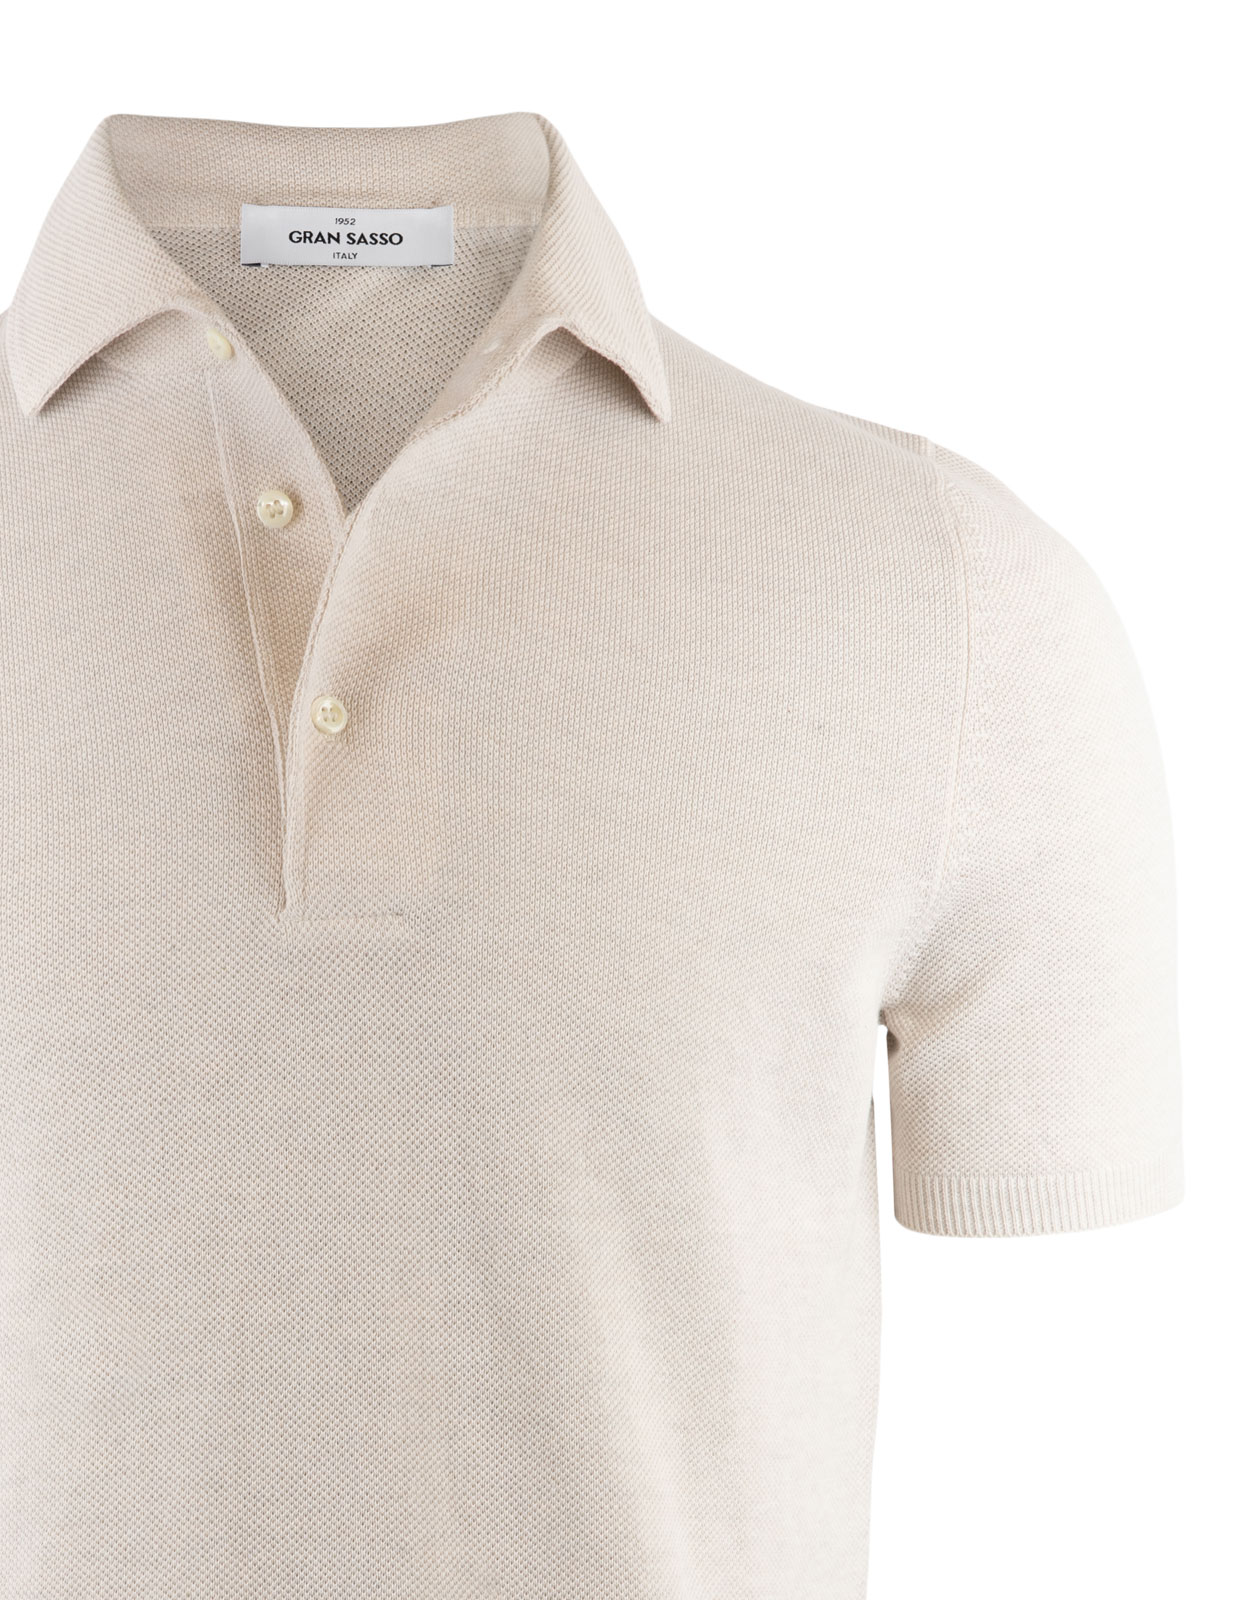 Fresh Cotton Polo Shirt Offwhite Stl 54